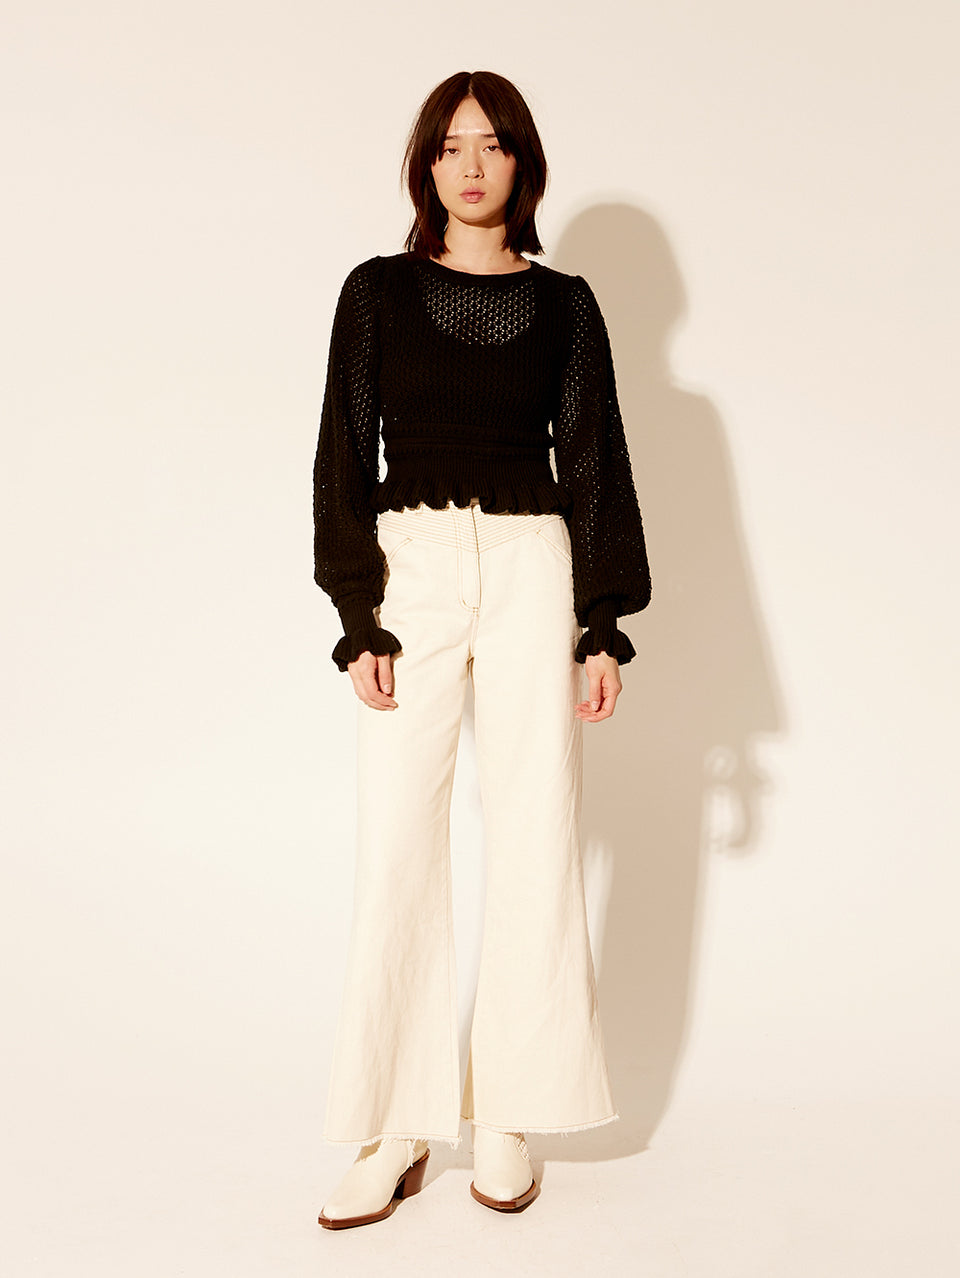 Rafaela Knit Top KIVARI | Model wears black knit top